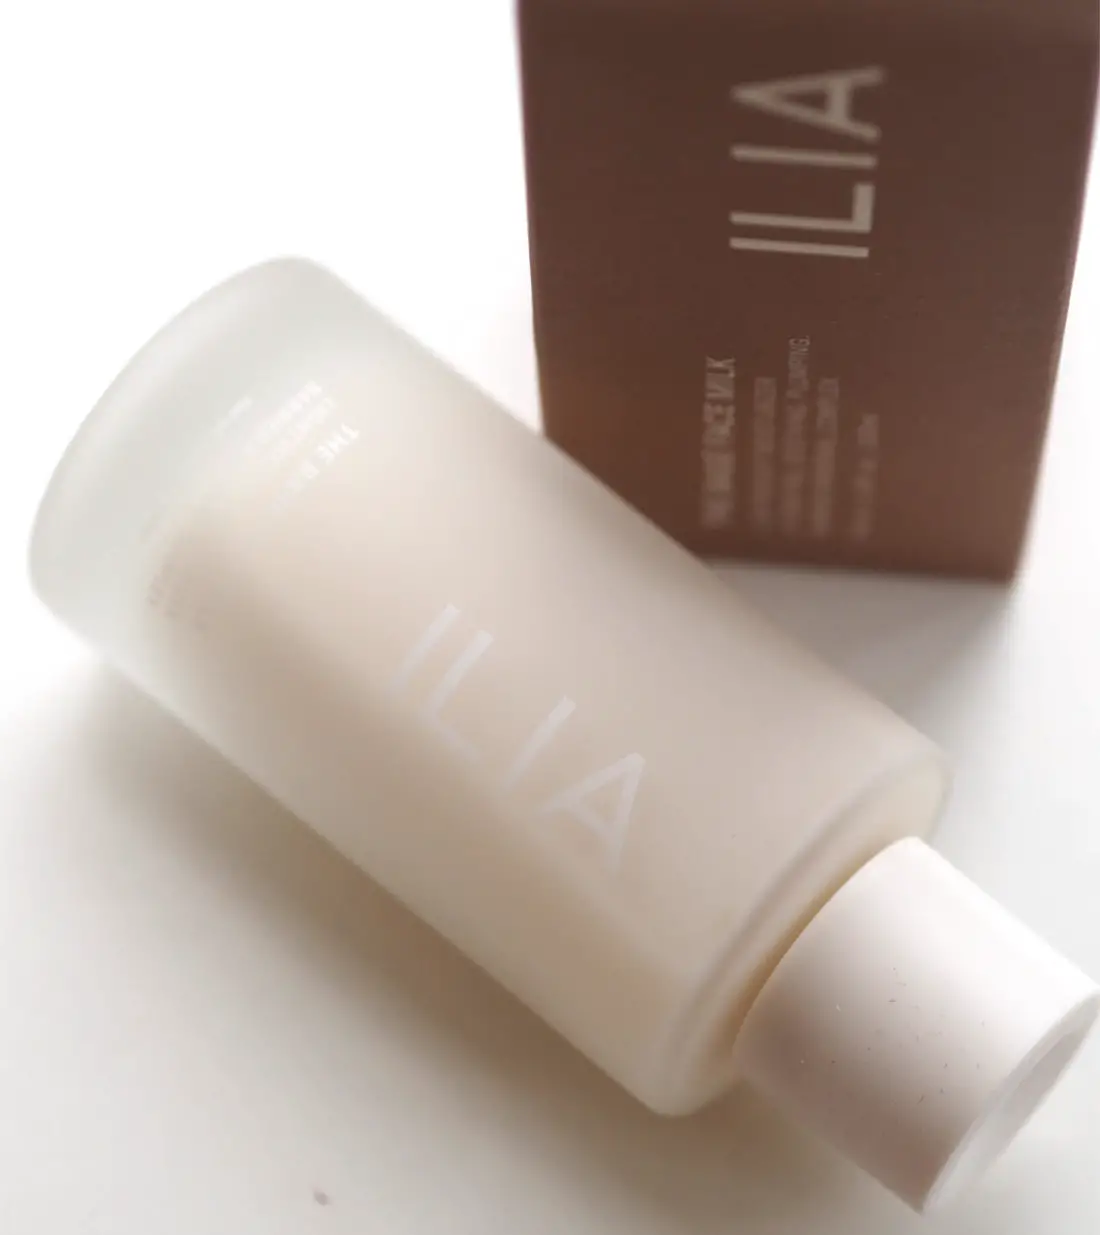 Ilia The Base Face Milk Review | British Beauty Blogger